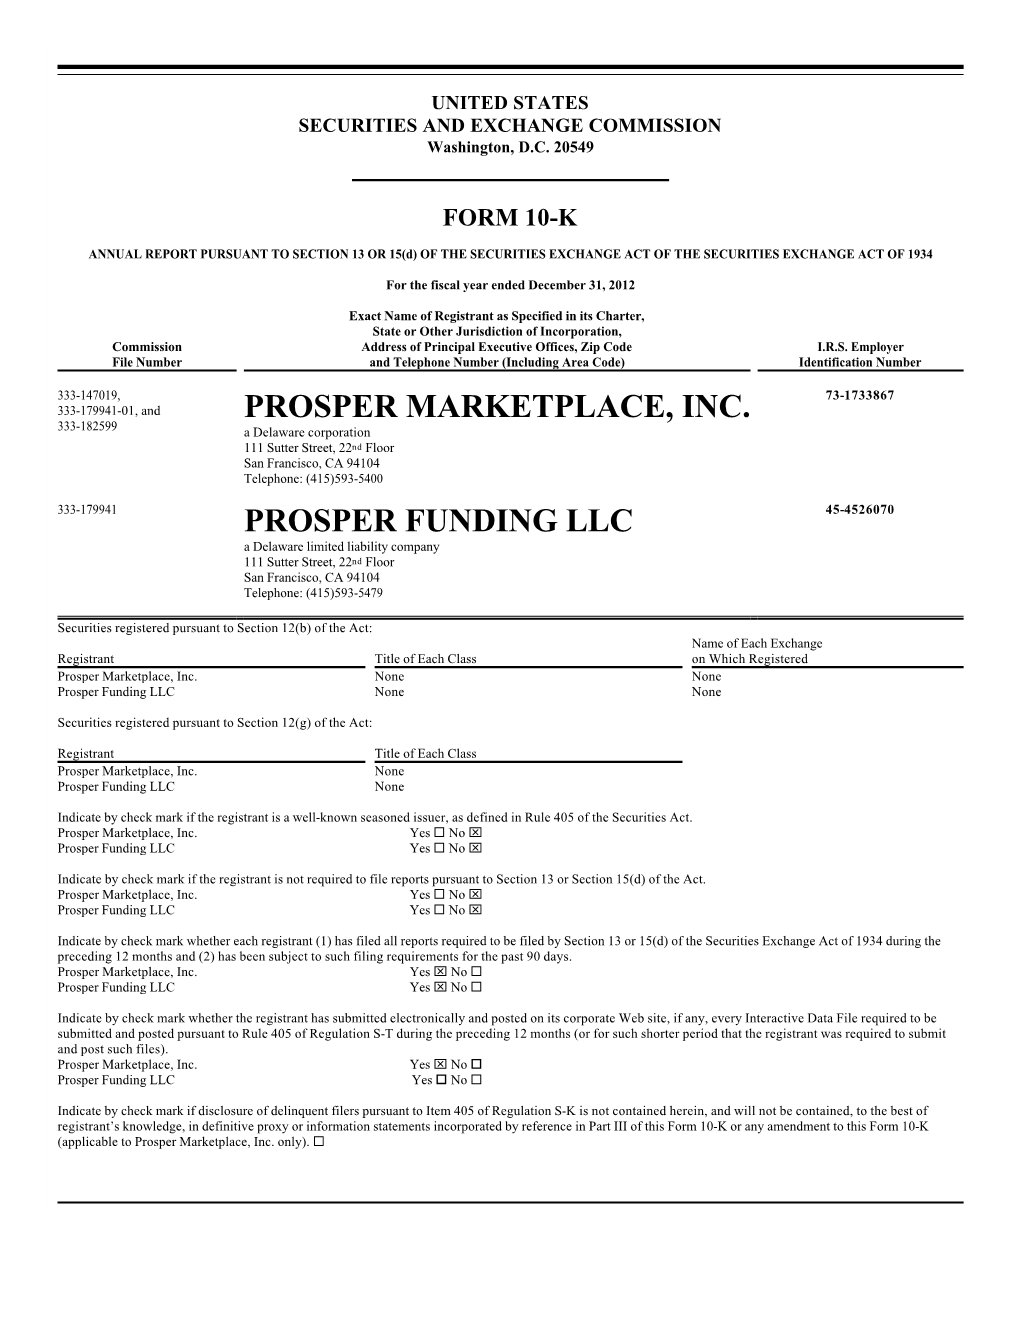 Prosper Marketplace, Inc. Prosper Funding